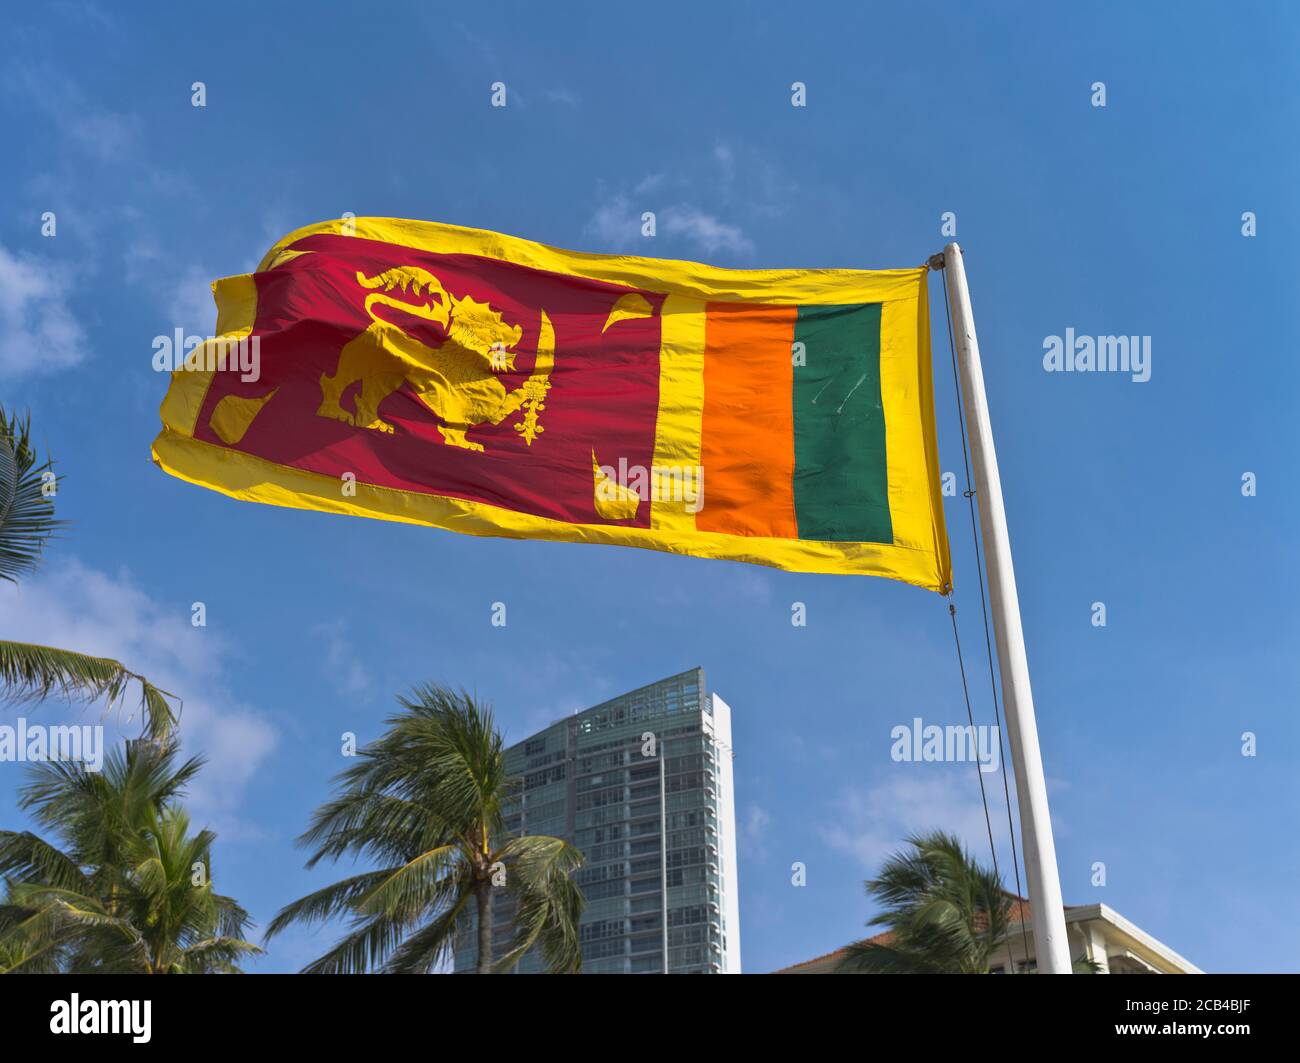 dh Sri Lanka Bandiera COLOMBO CITTÀ SRI LANKA standard nazionale bandiere flagpole Foto Stock